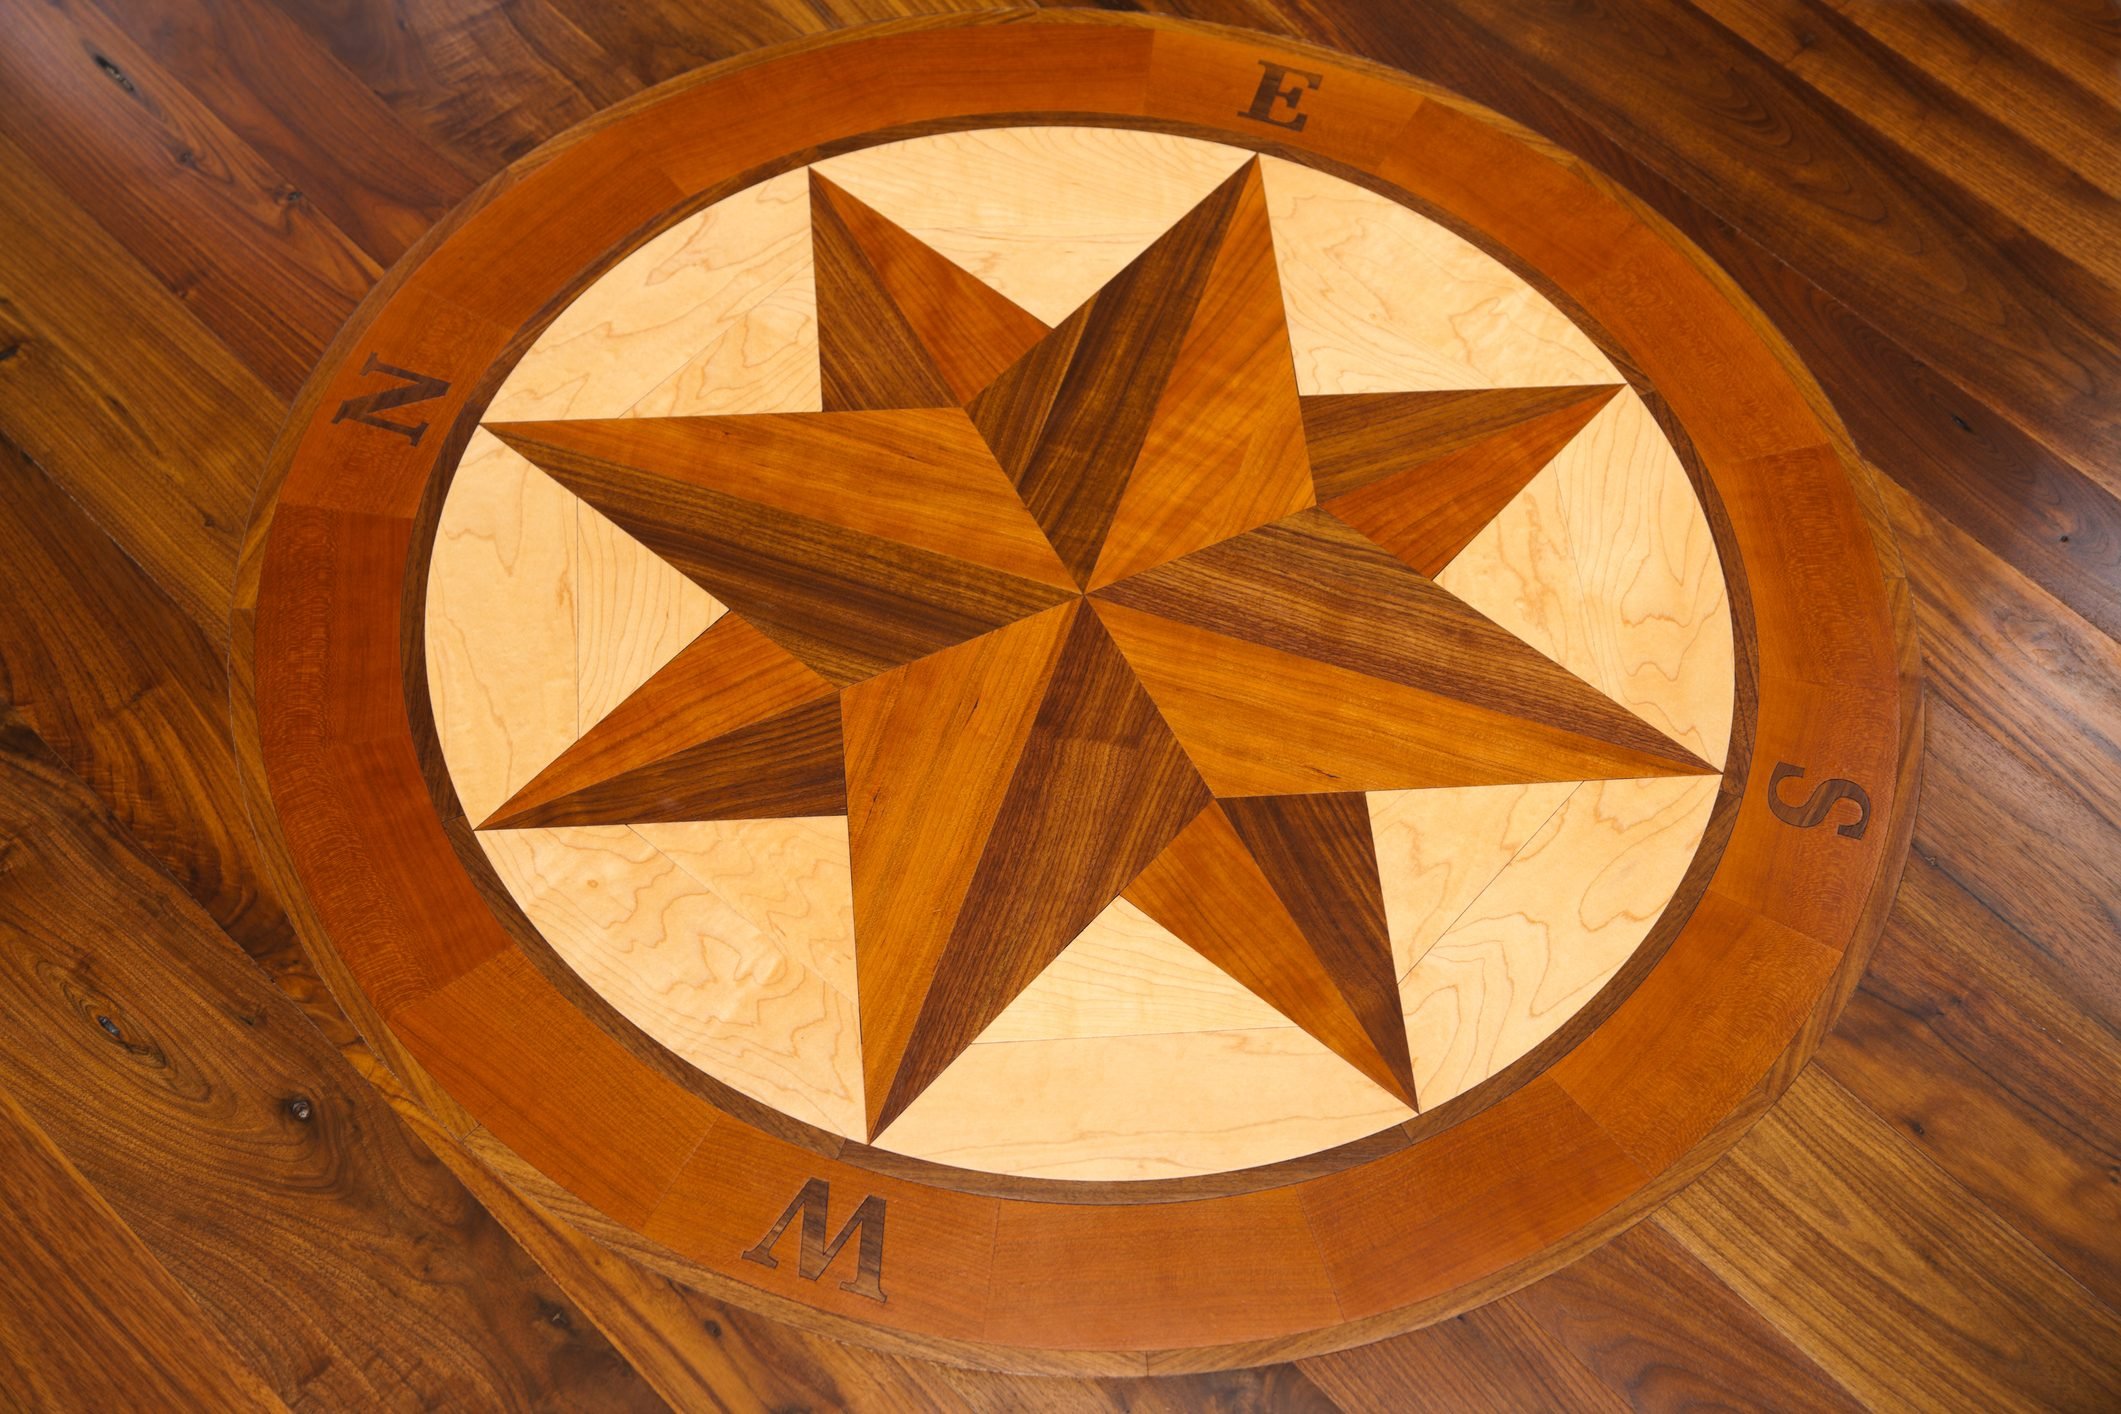 Wooden Compass Making + Plan  Wooden diy, Diy woodworking, Wooden